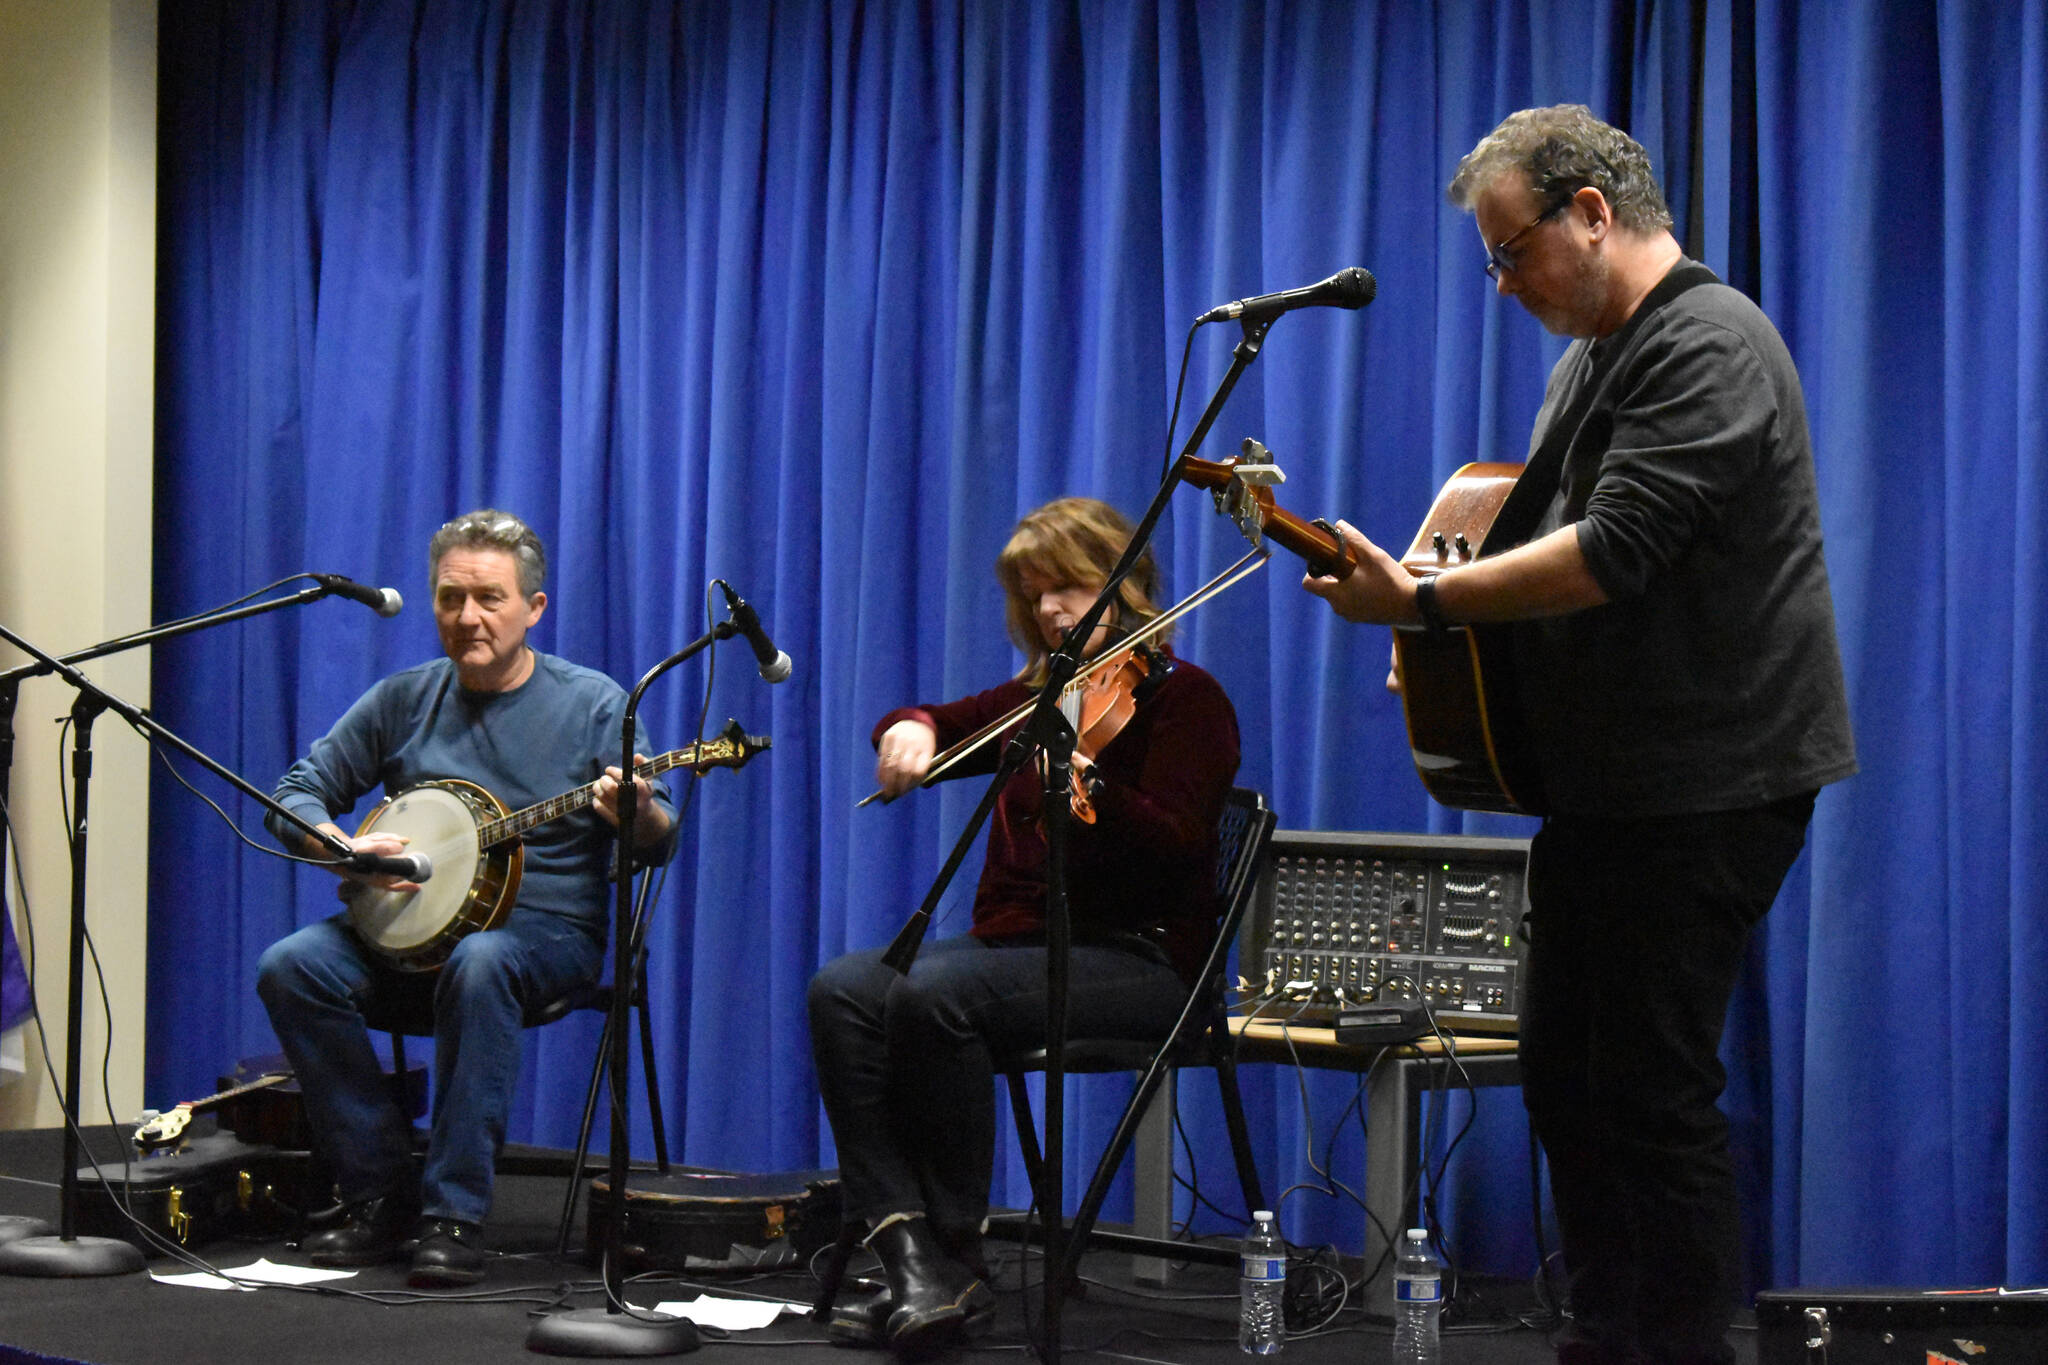 John Walsh, Rose Flanagan and Pat Broaders perform during "An Evening of Traditional Irish Music" on Friday, Jan. 27, 2023, at Kenai Peninsula College in Soldotna, Alaska. (Jake Dye/Peninsula Clarion)